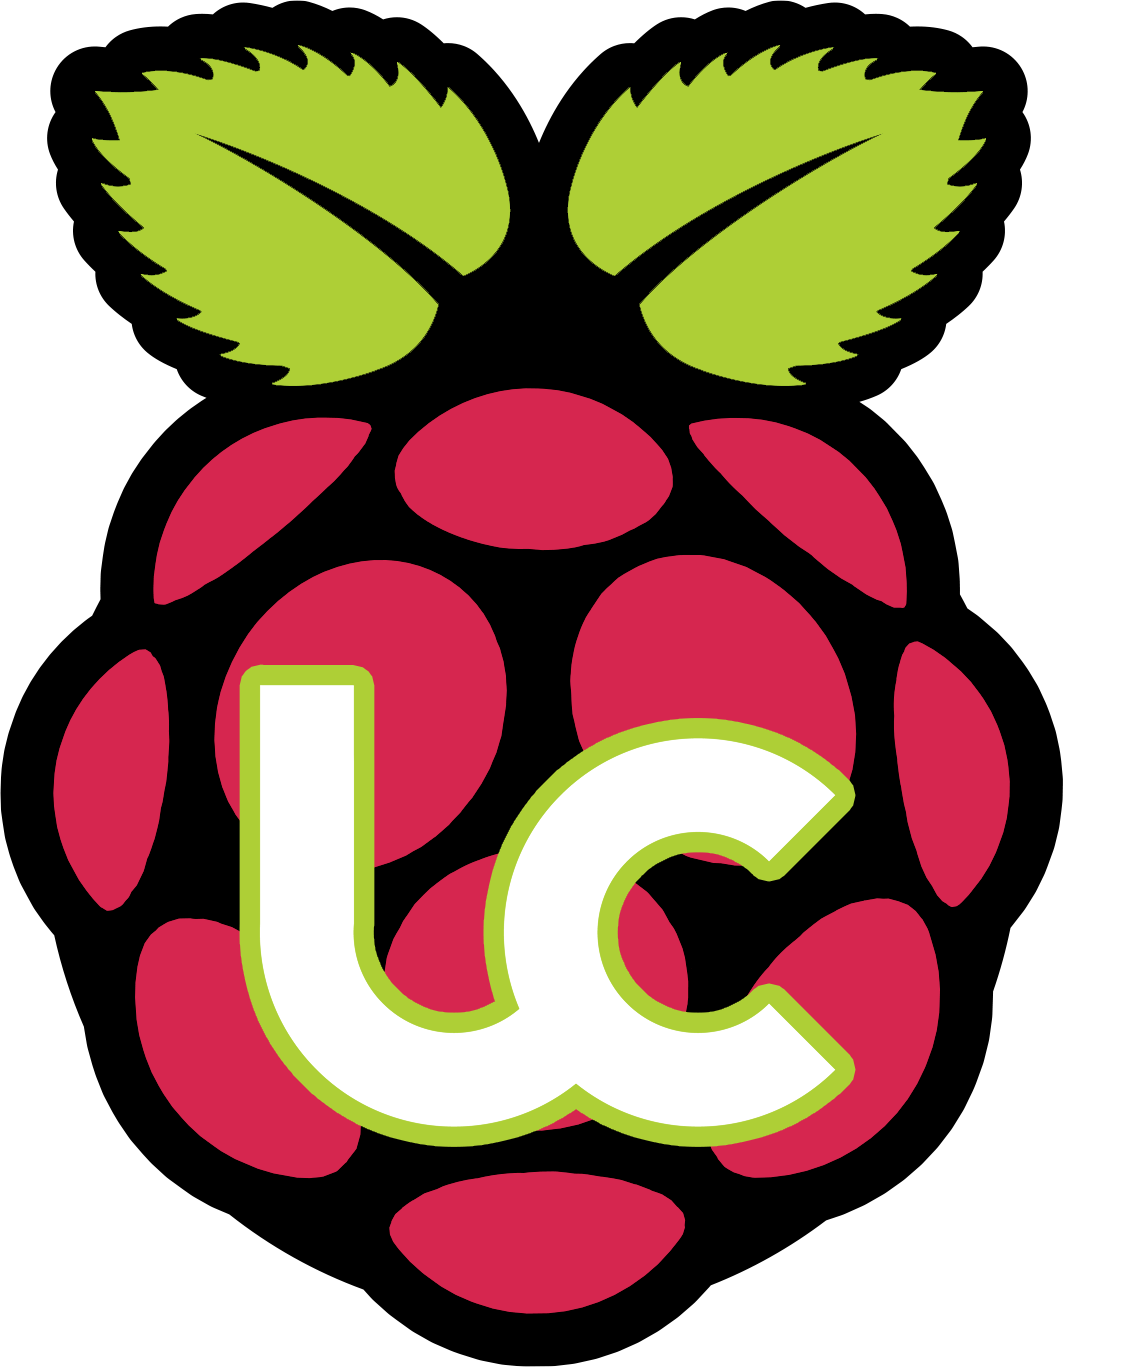 Raspberry Pi LC